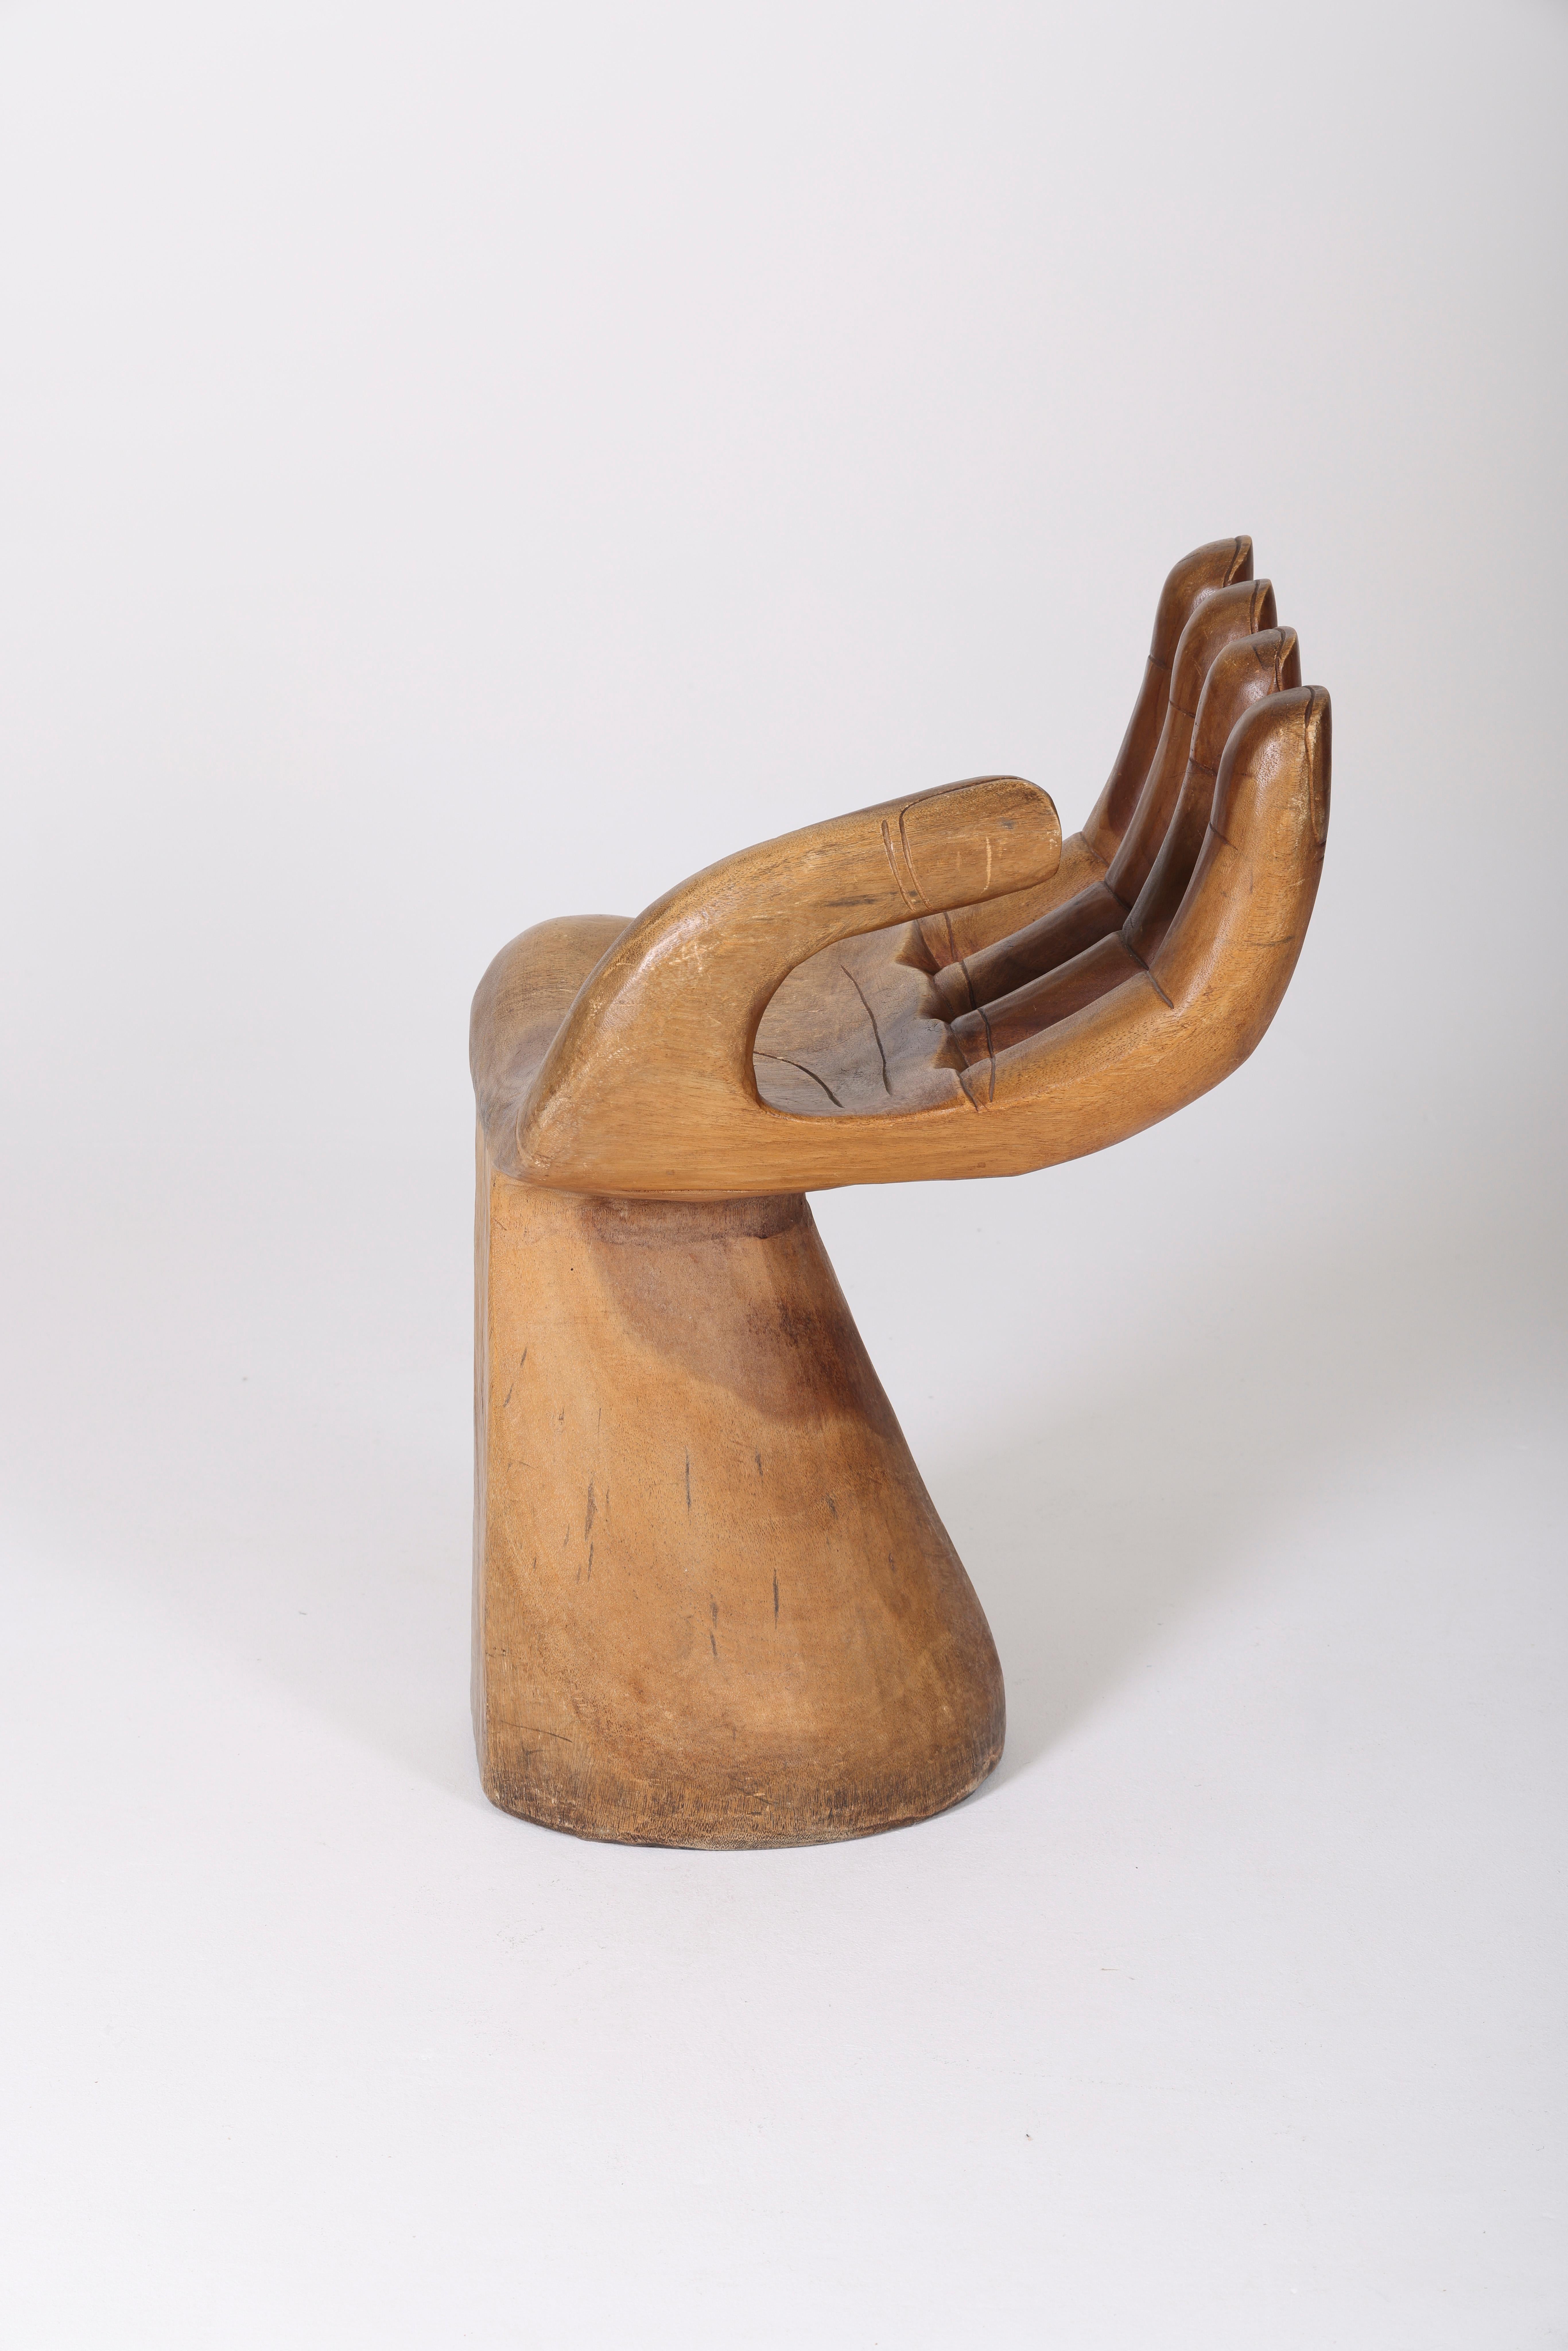 wooden hand chair